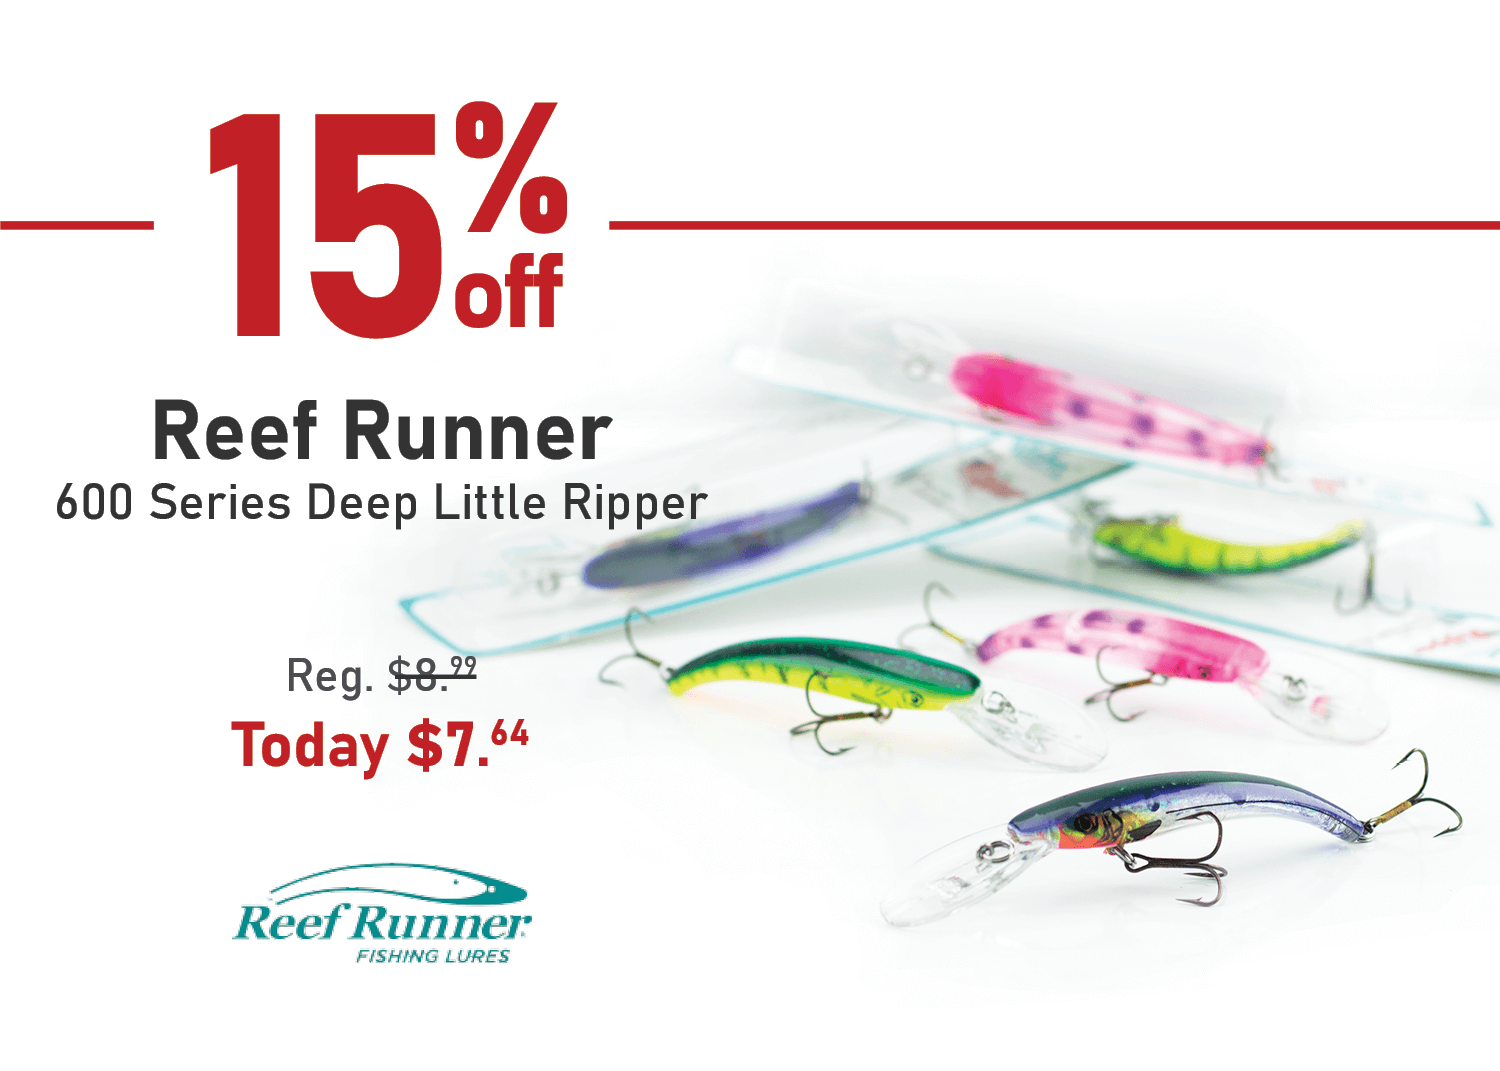 Save 15% on the Reef Runner 600 Series Deep Little Ripper